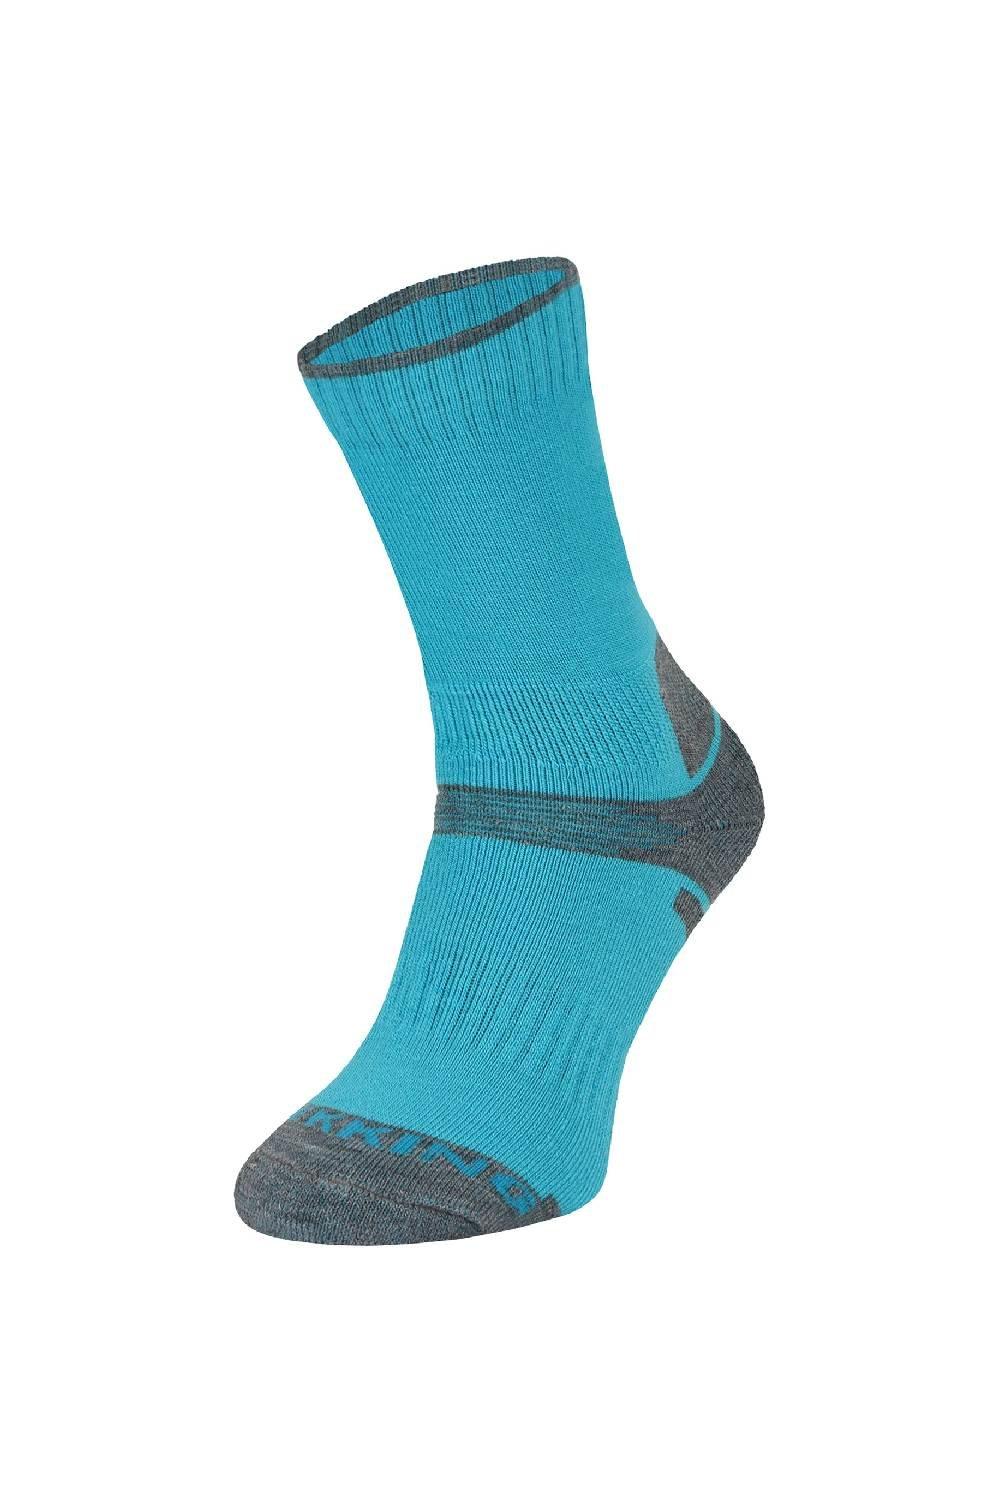 Merino Wool Hiking Socks - Breathable Anti Blister Socks